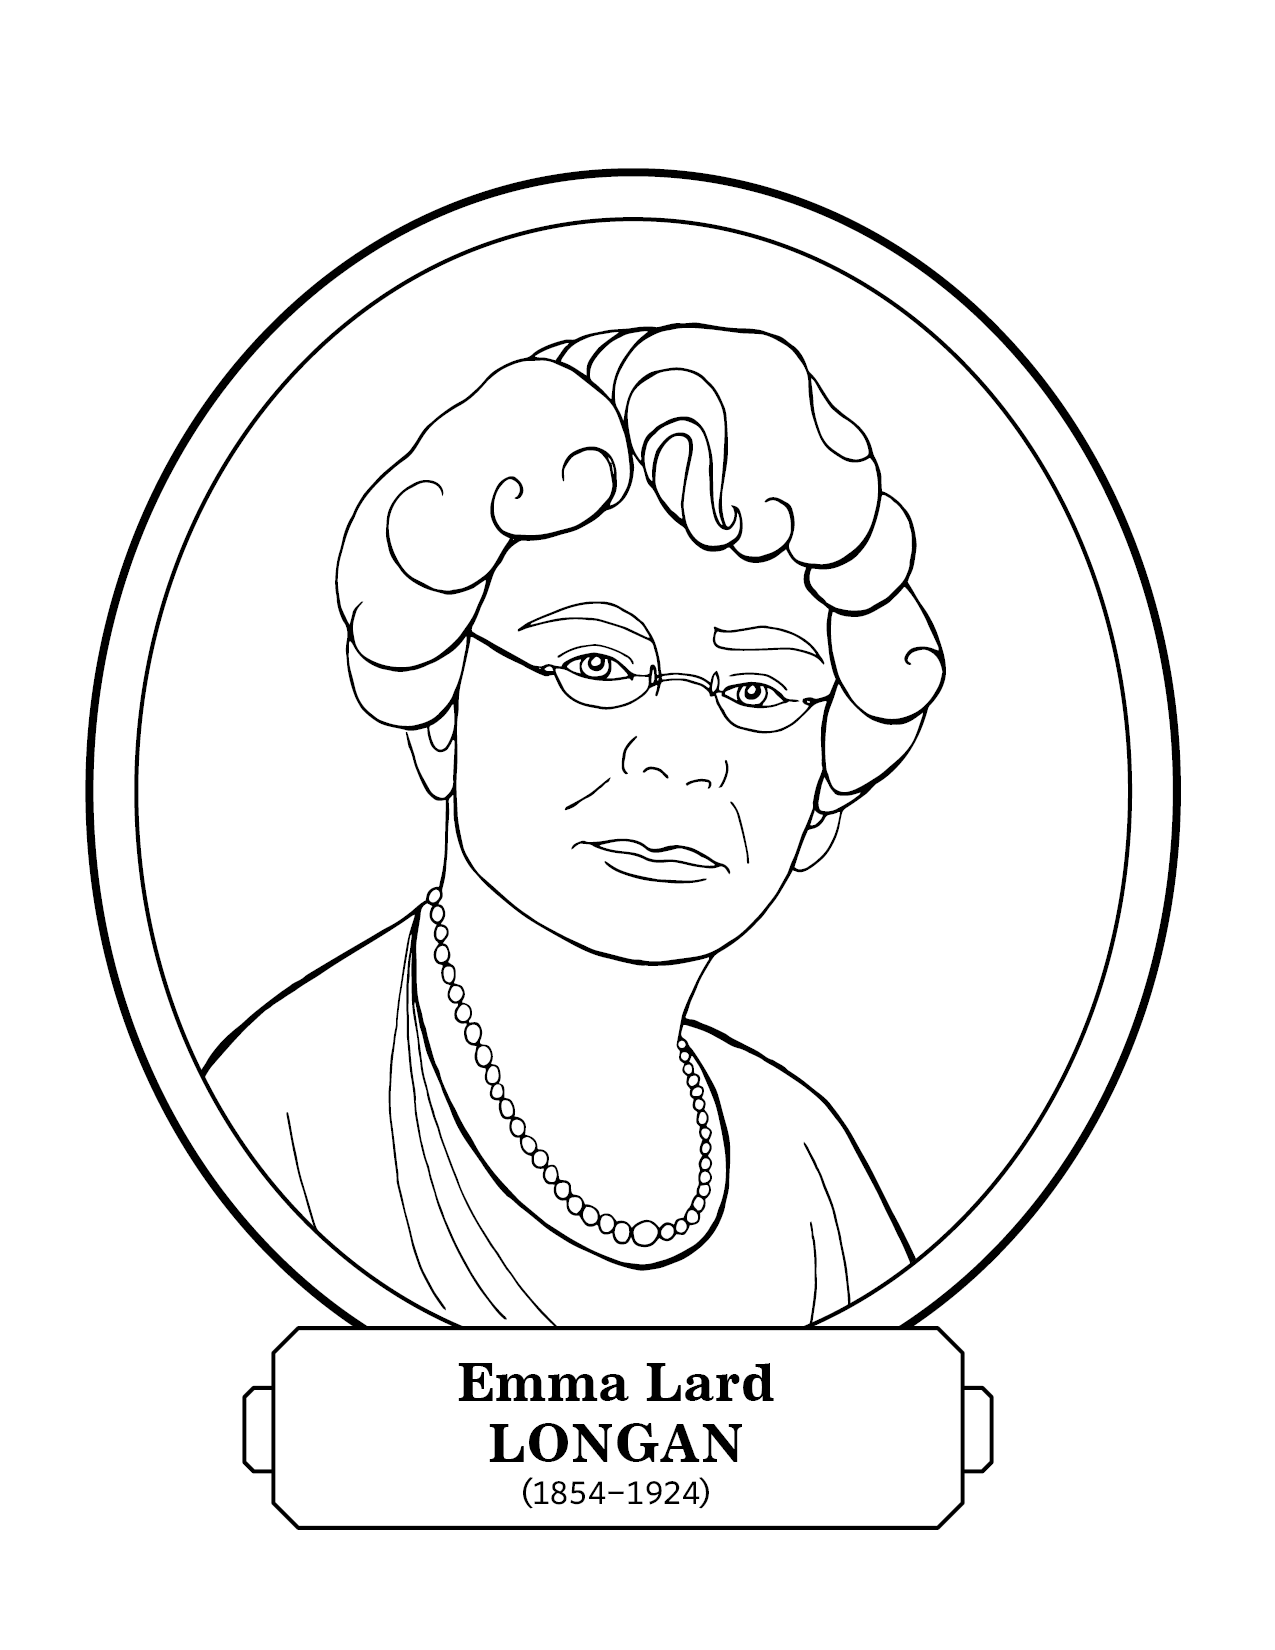 Emma Lard Longan